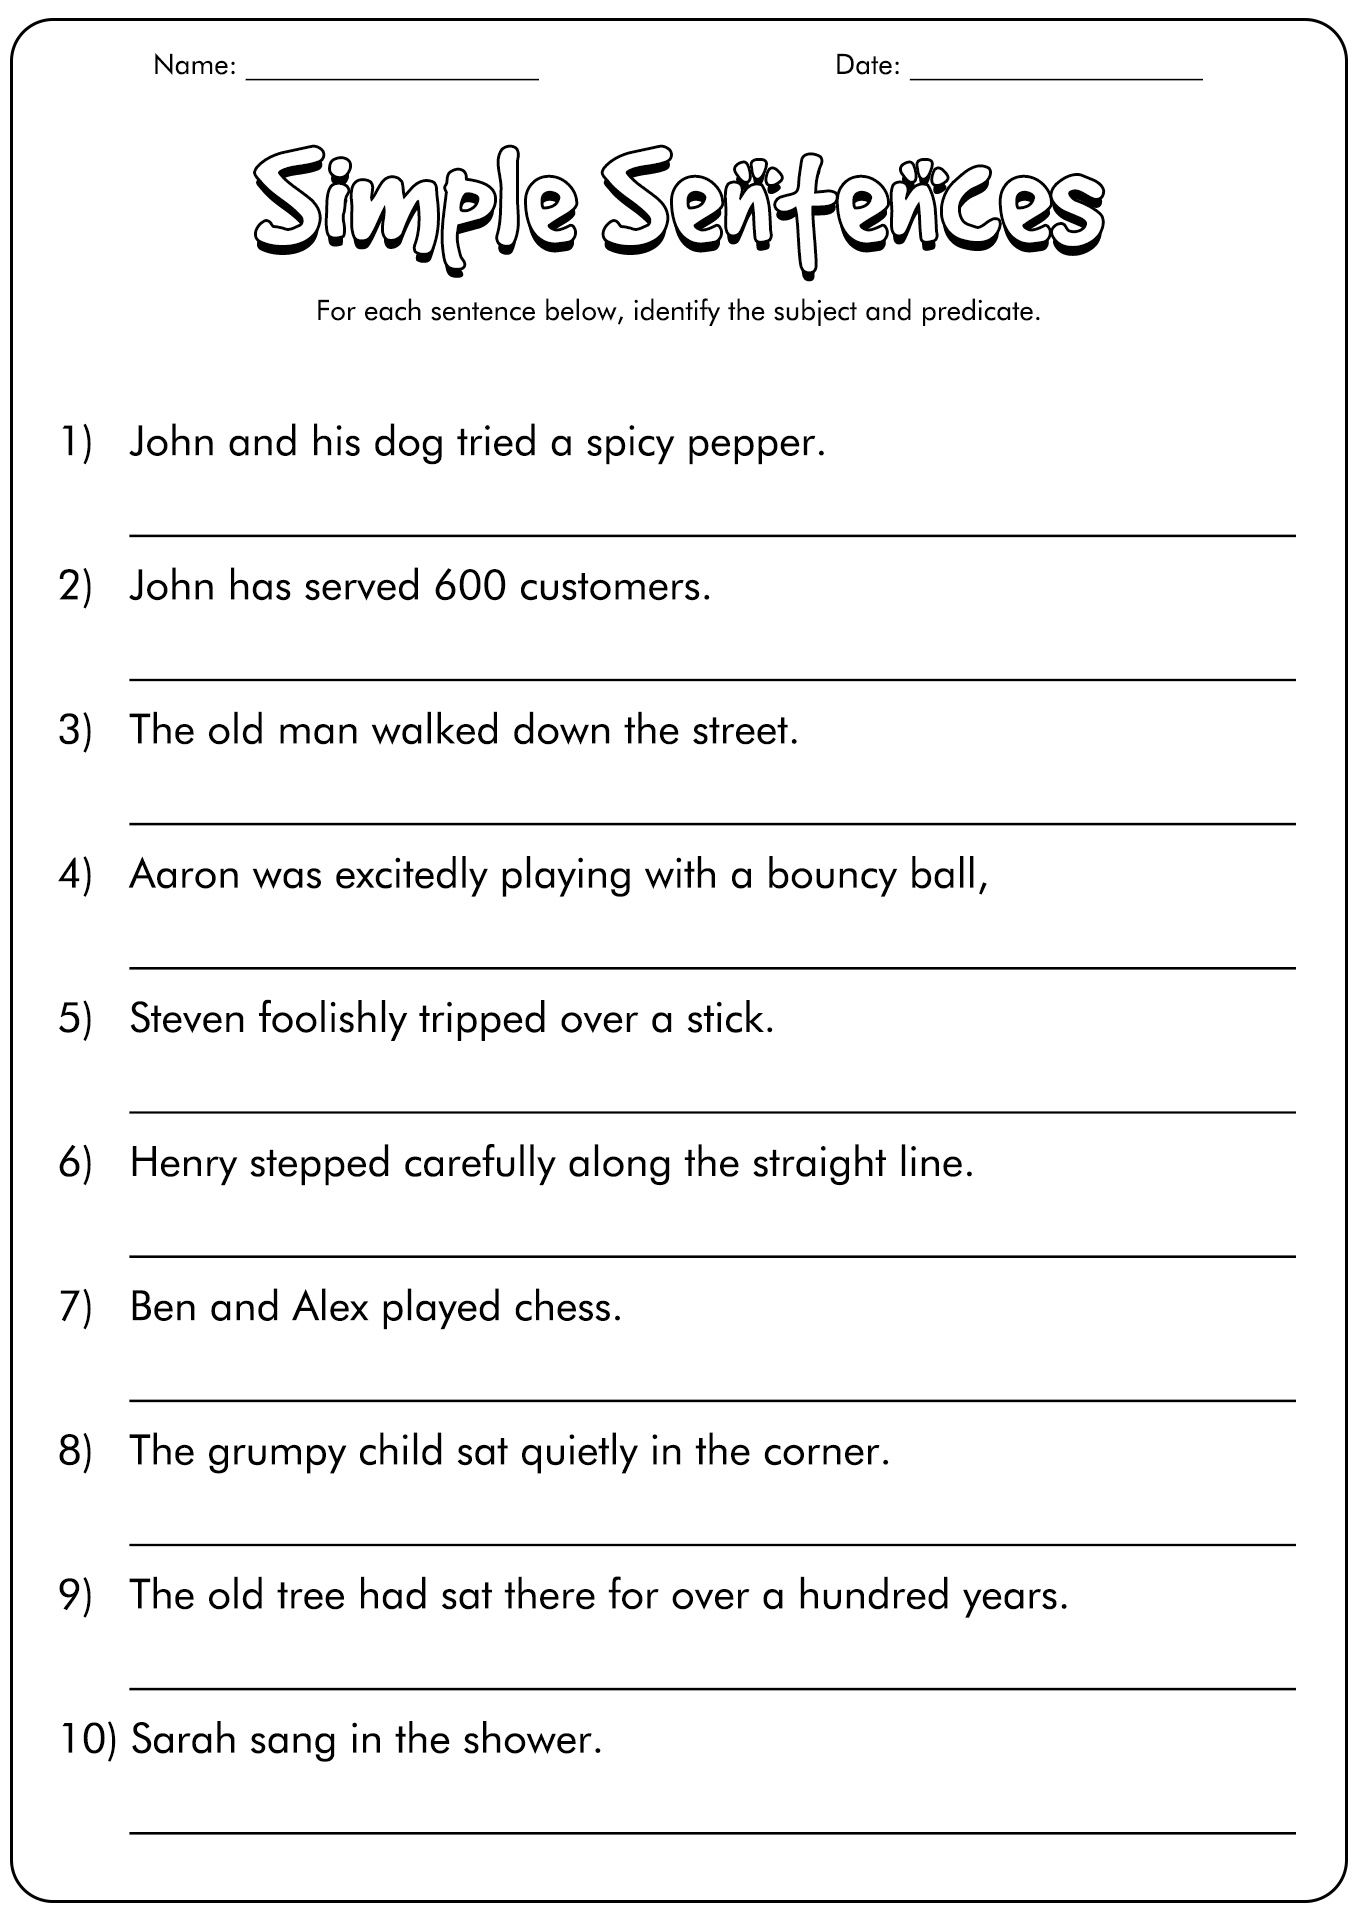 Simple Sentences Worksheets Image